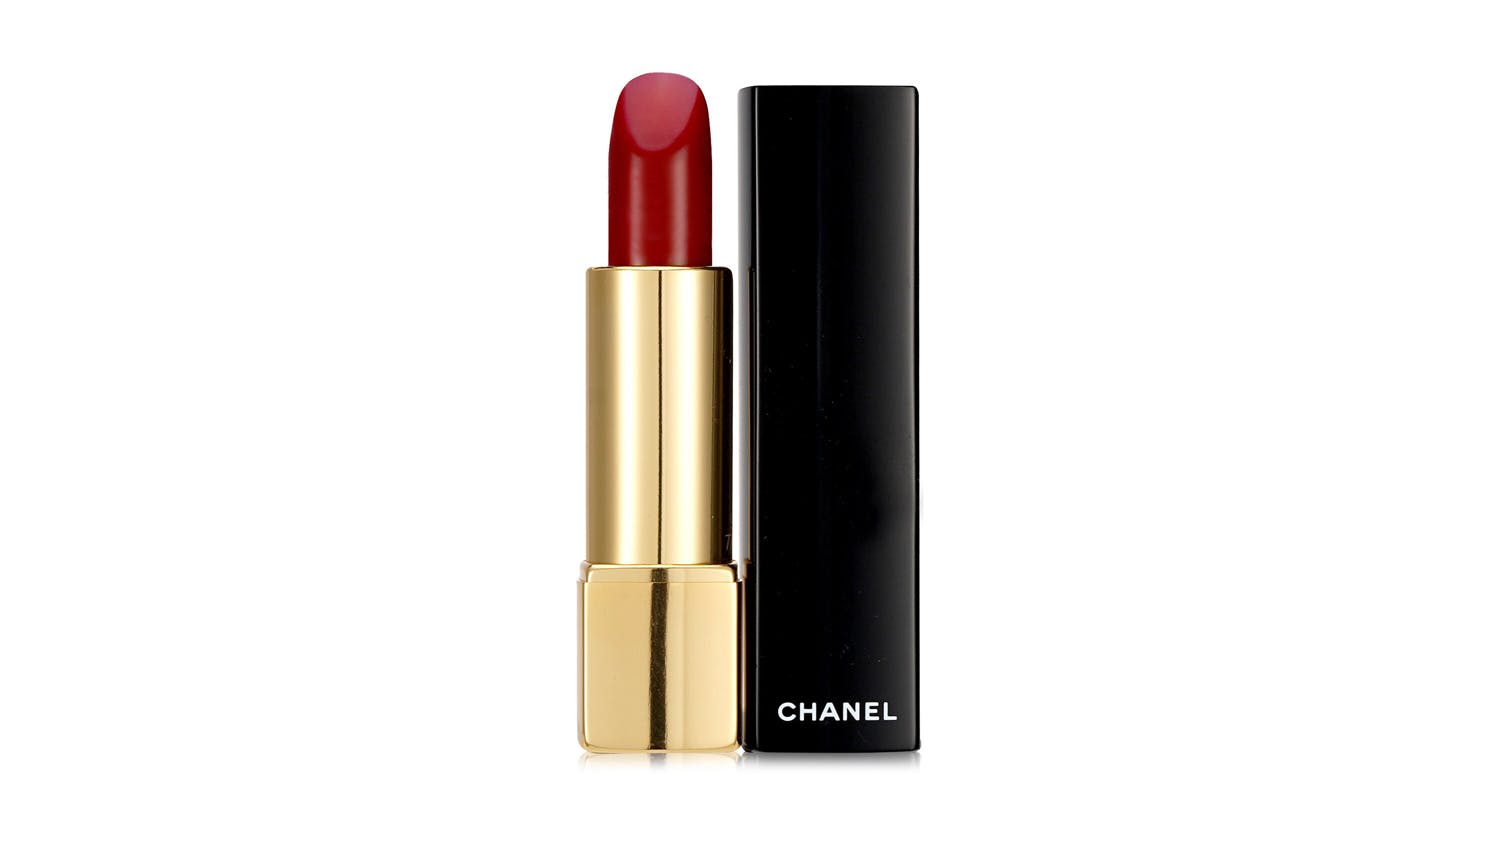 Chanel Rouge Allure Luminous Intense Lip Colour - # 99 Pirate